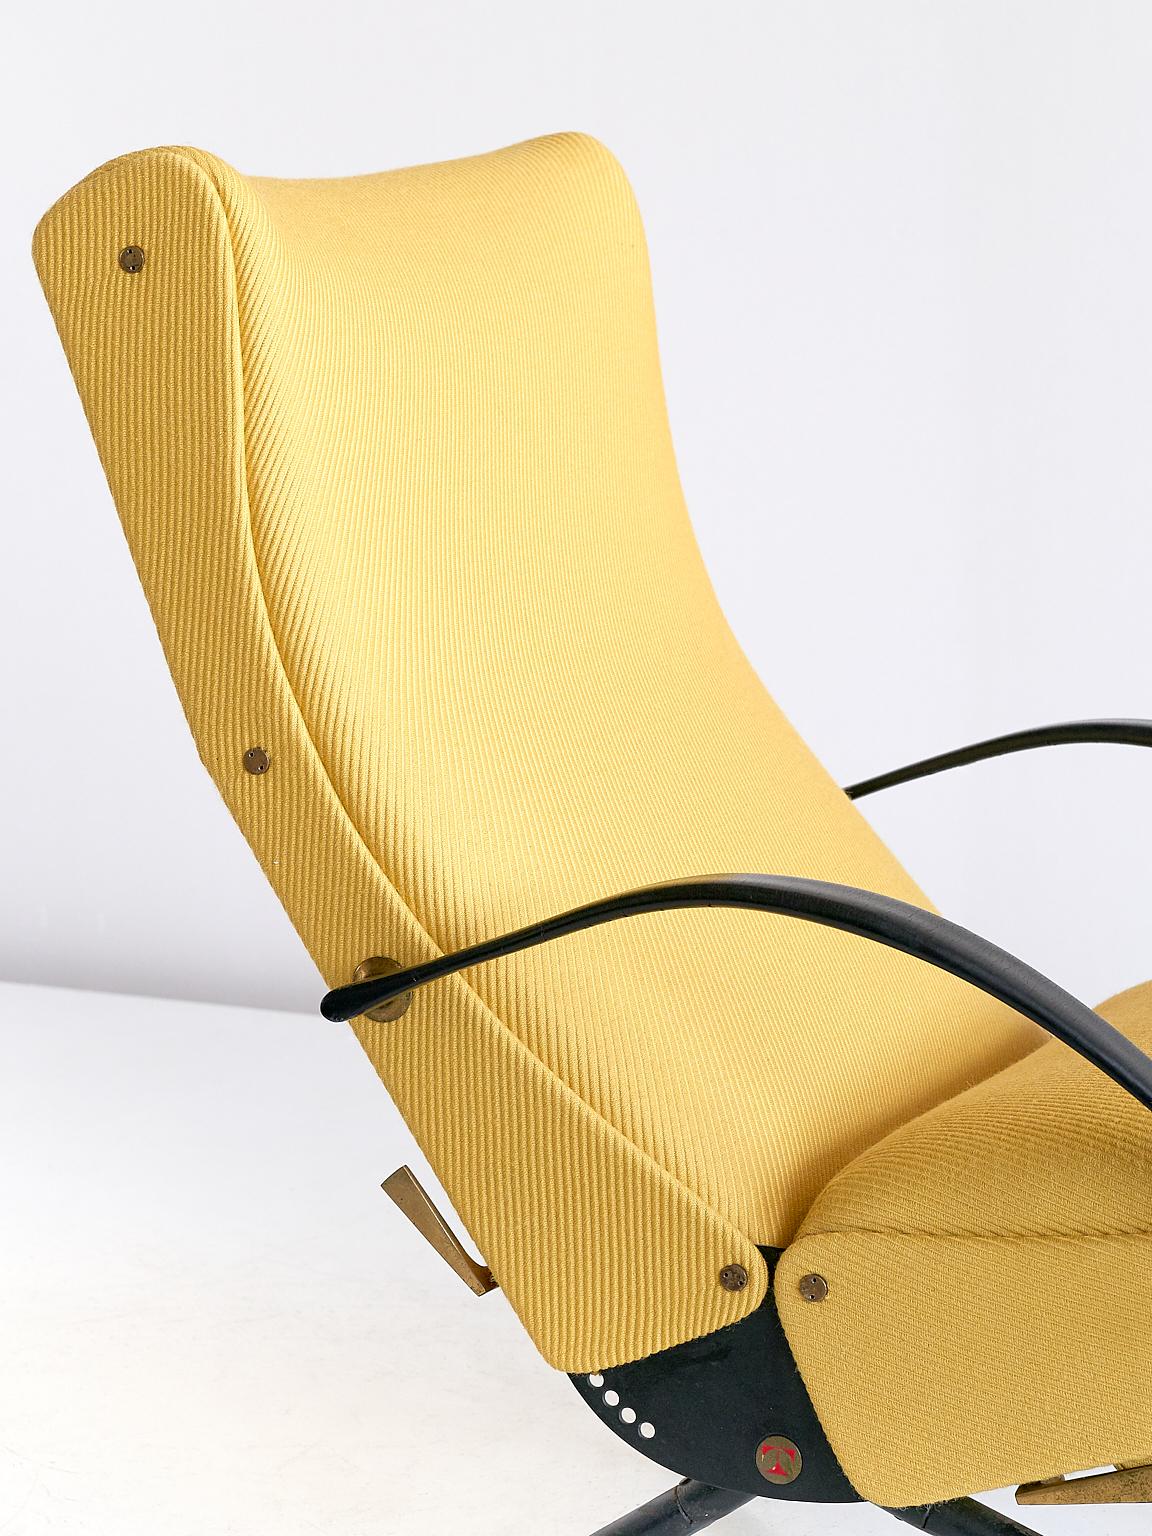 Osvaldo Borsani P40 Lounge Chair, First Edition for Tecno, Italy, 1955 5